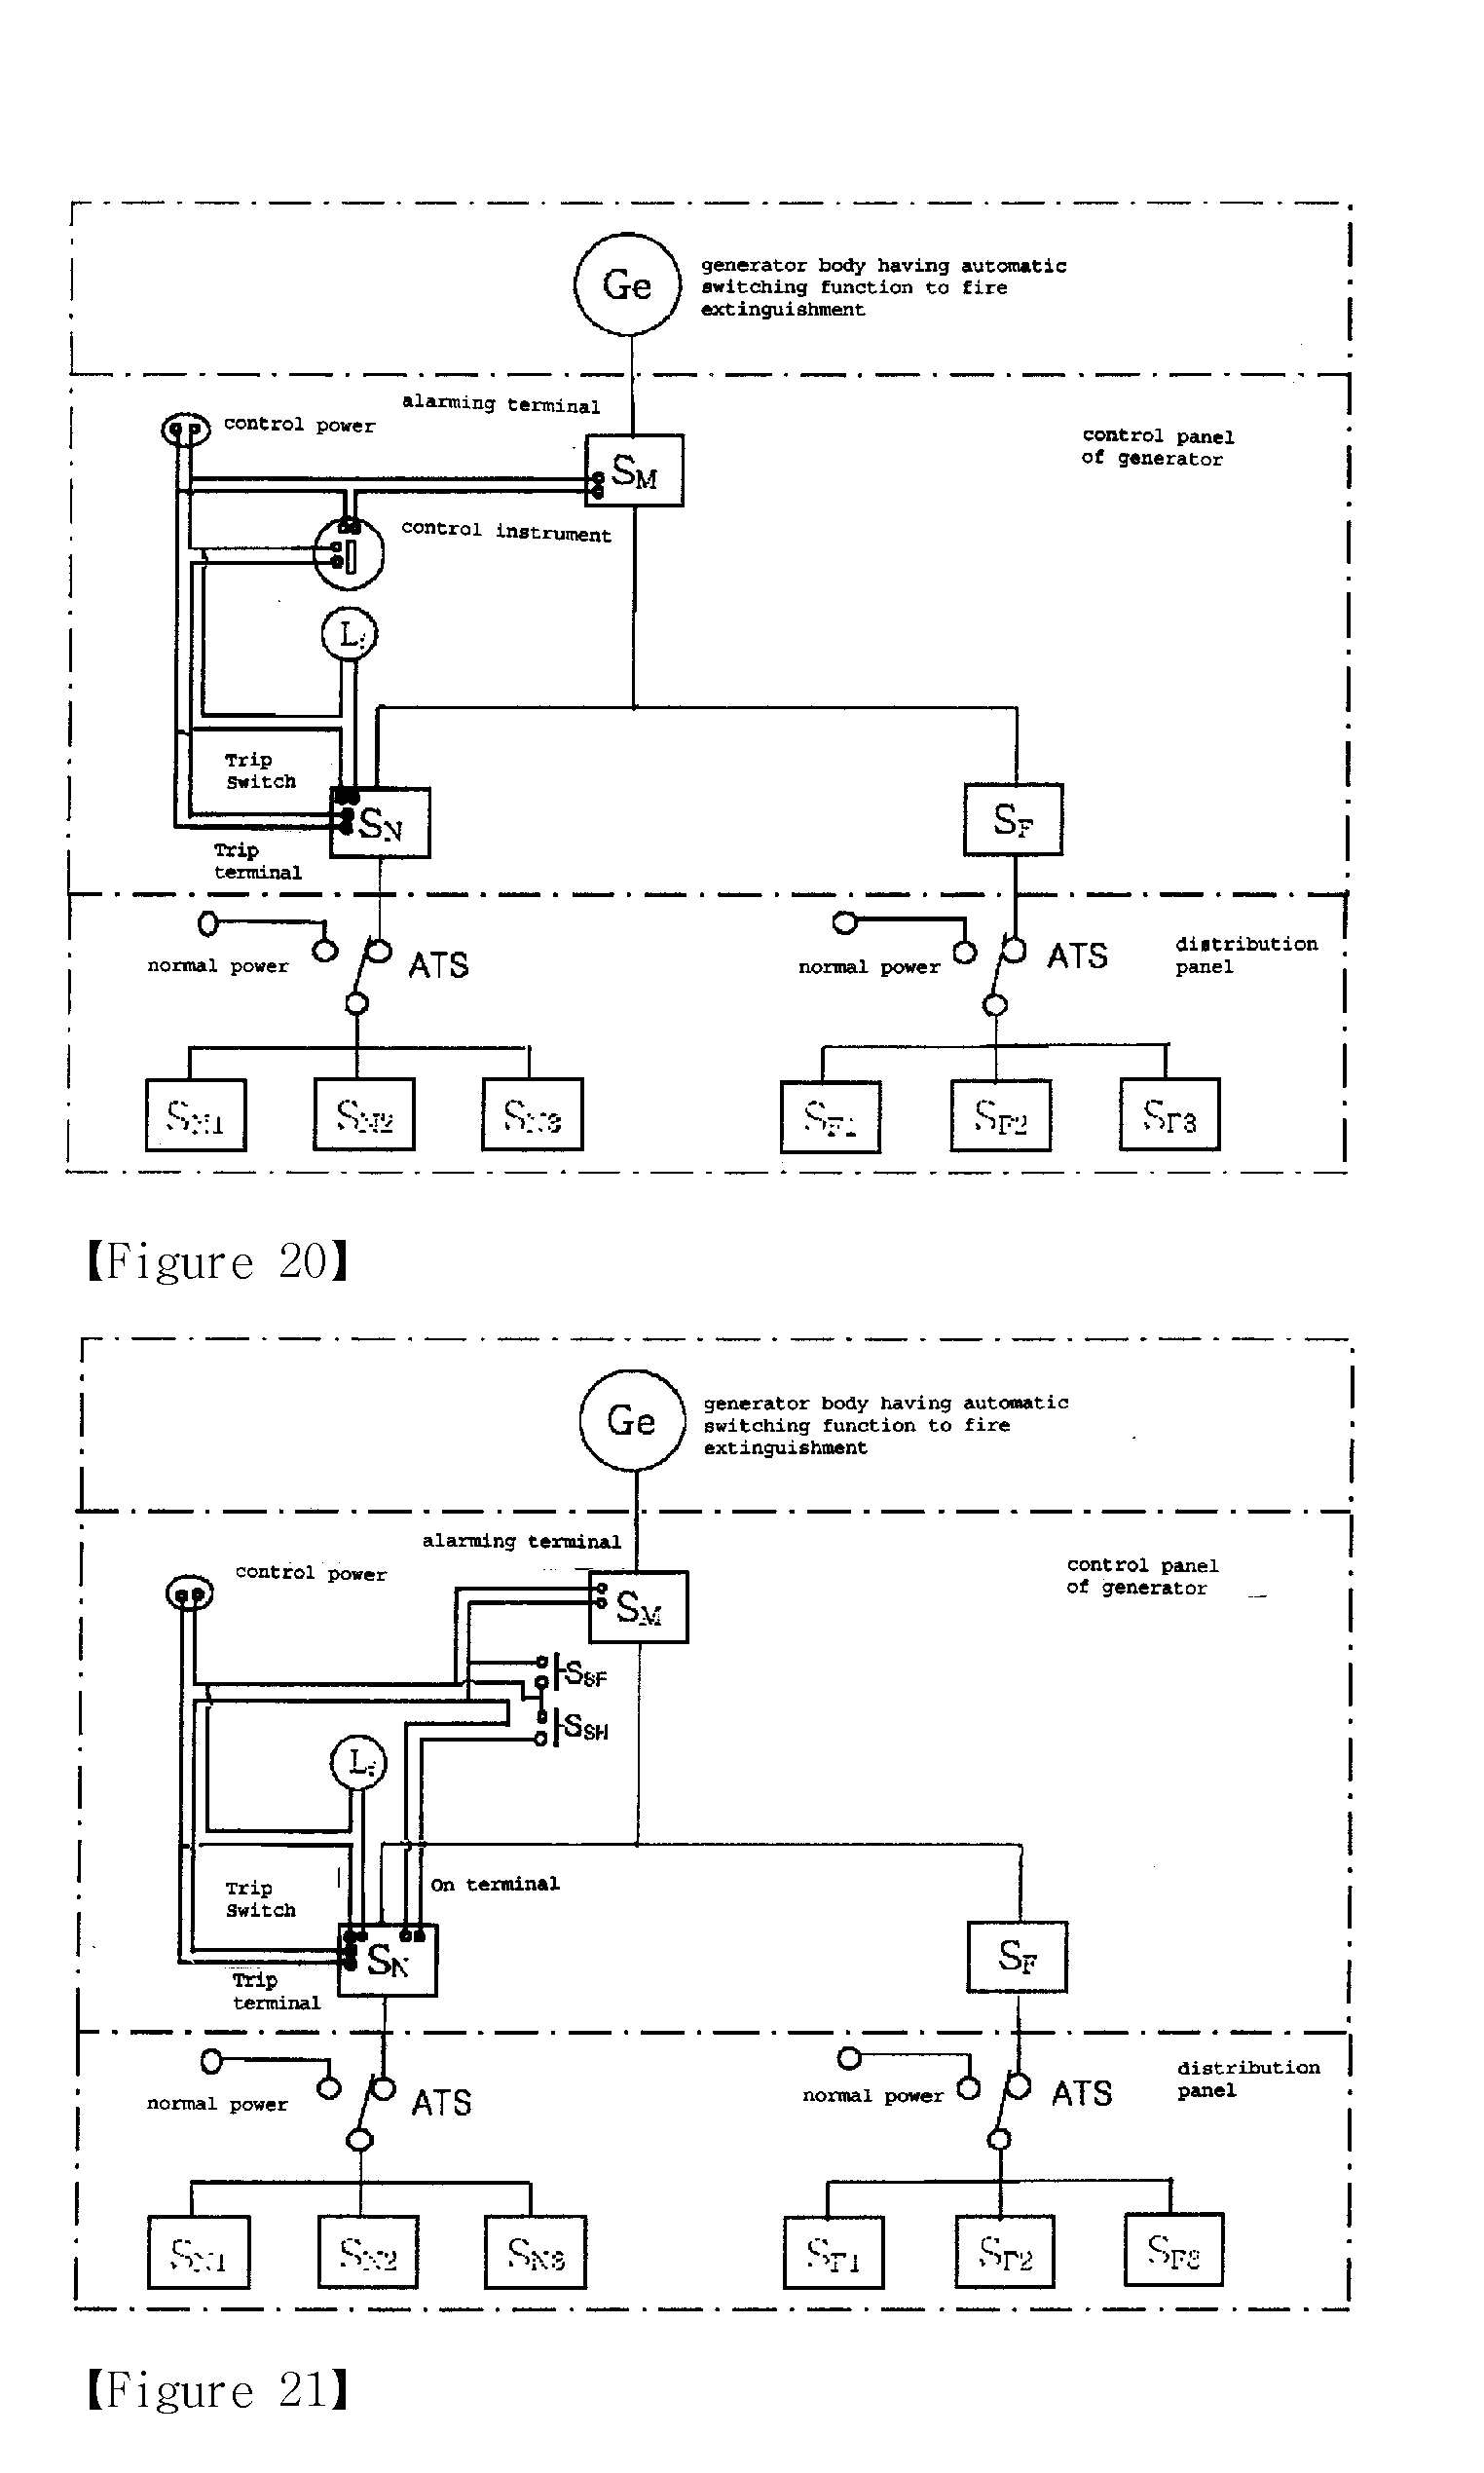 fire alarm flow switch wiring diagram wiring diagram view flow switch wiring diagram wiring diagram data